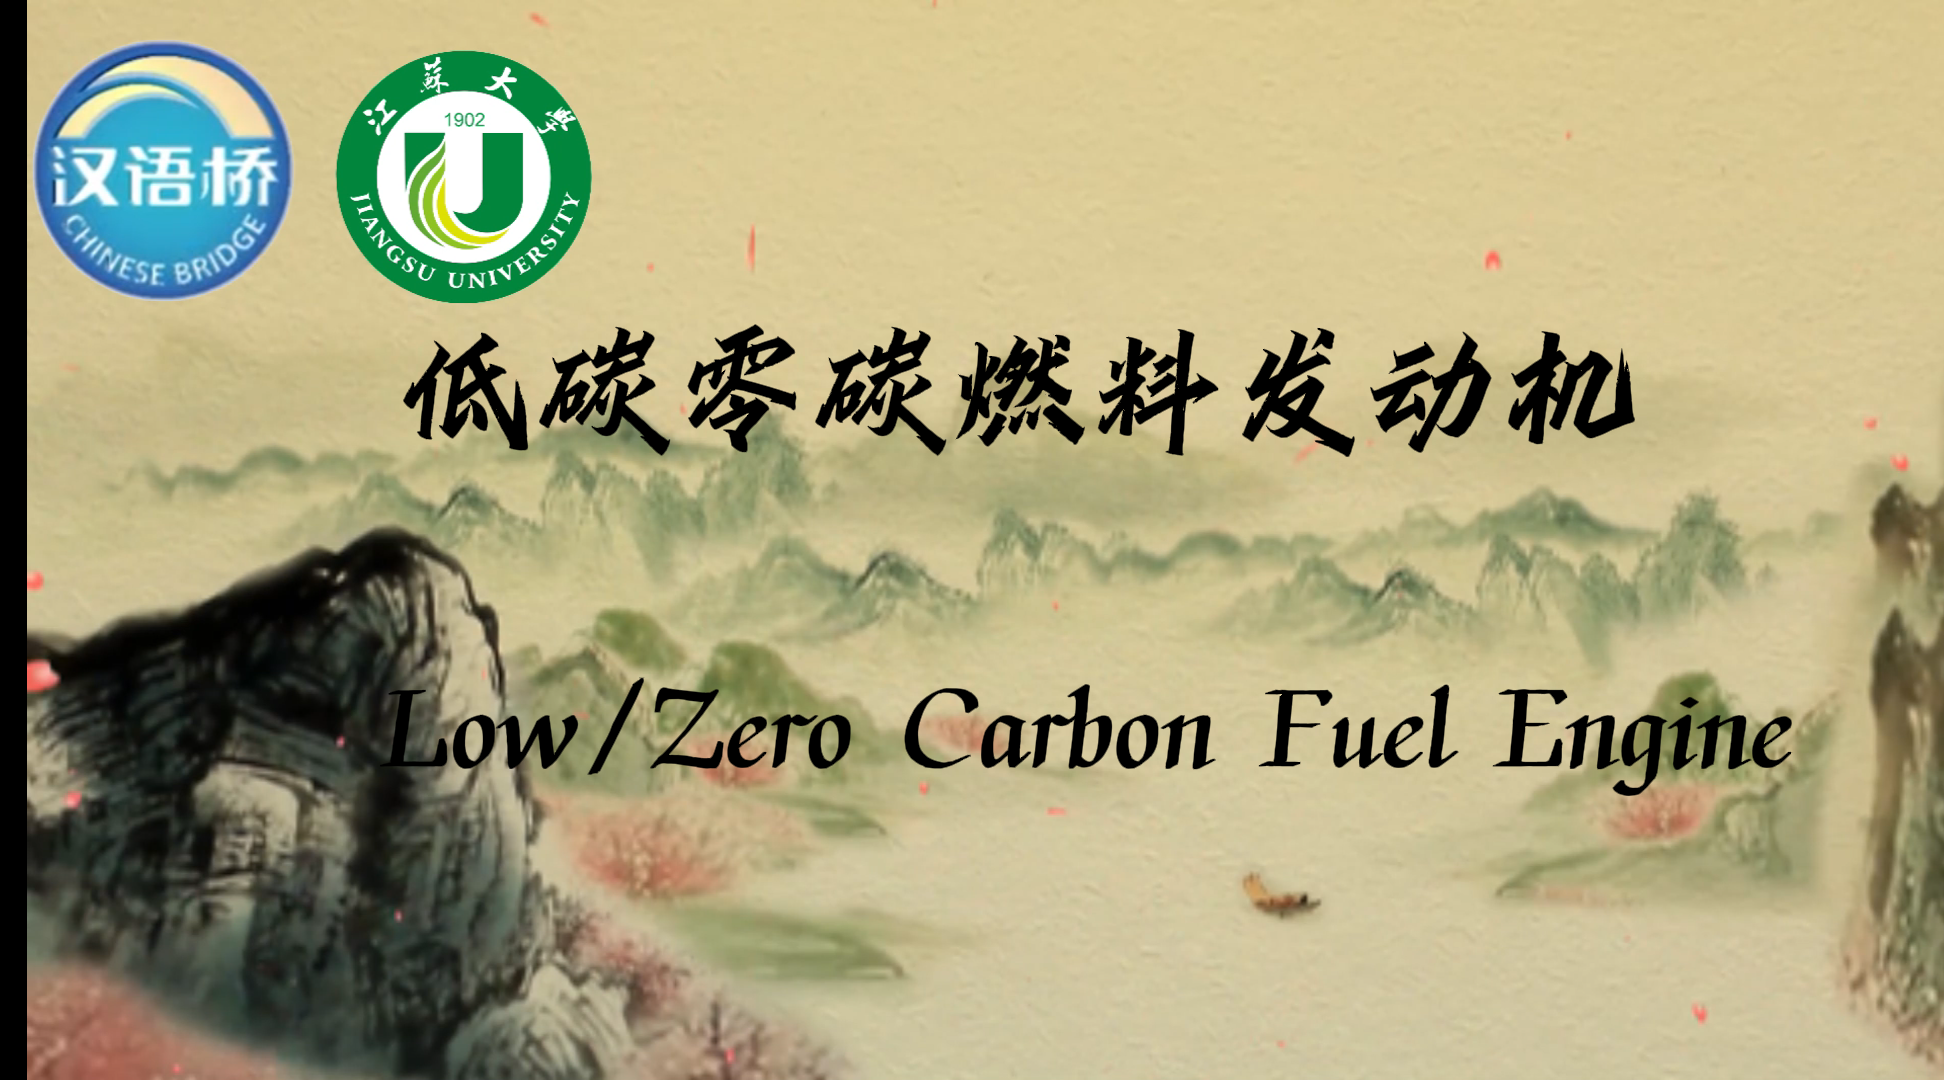 Low/Zero Carbon Fuel Engine